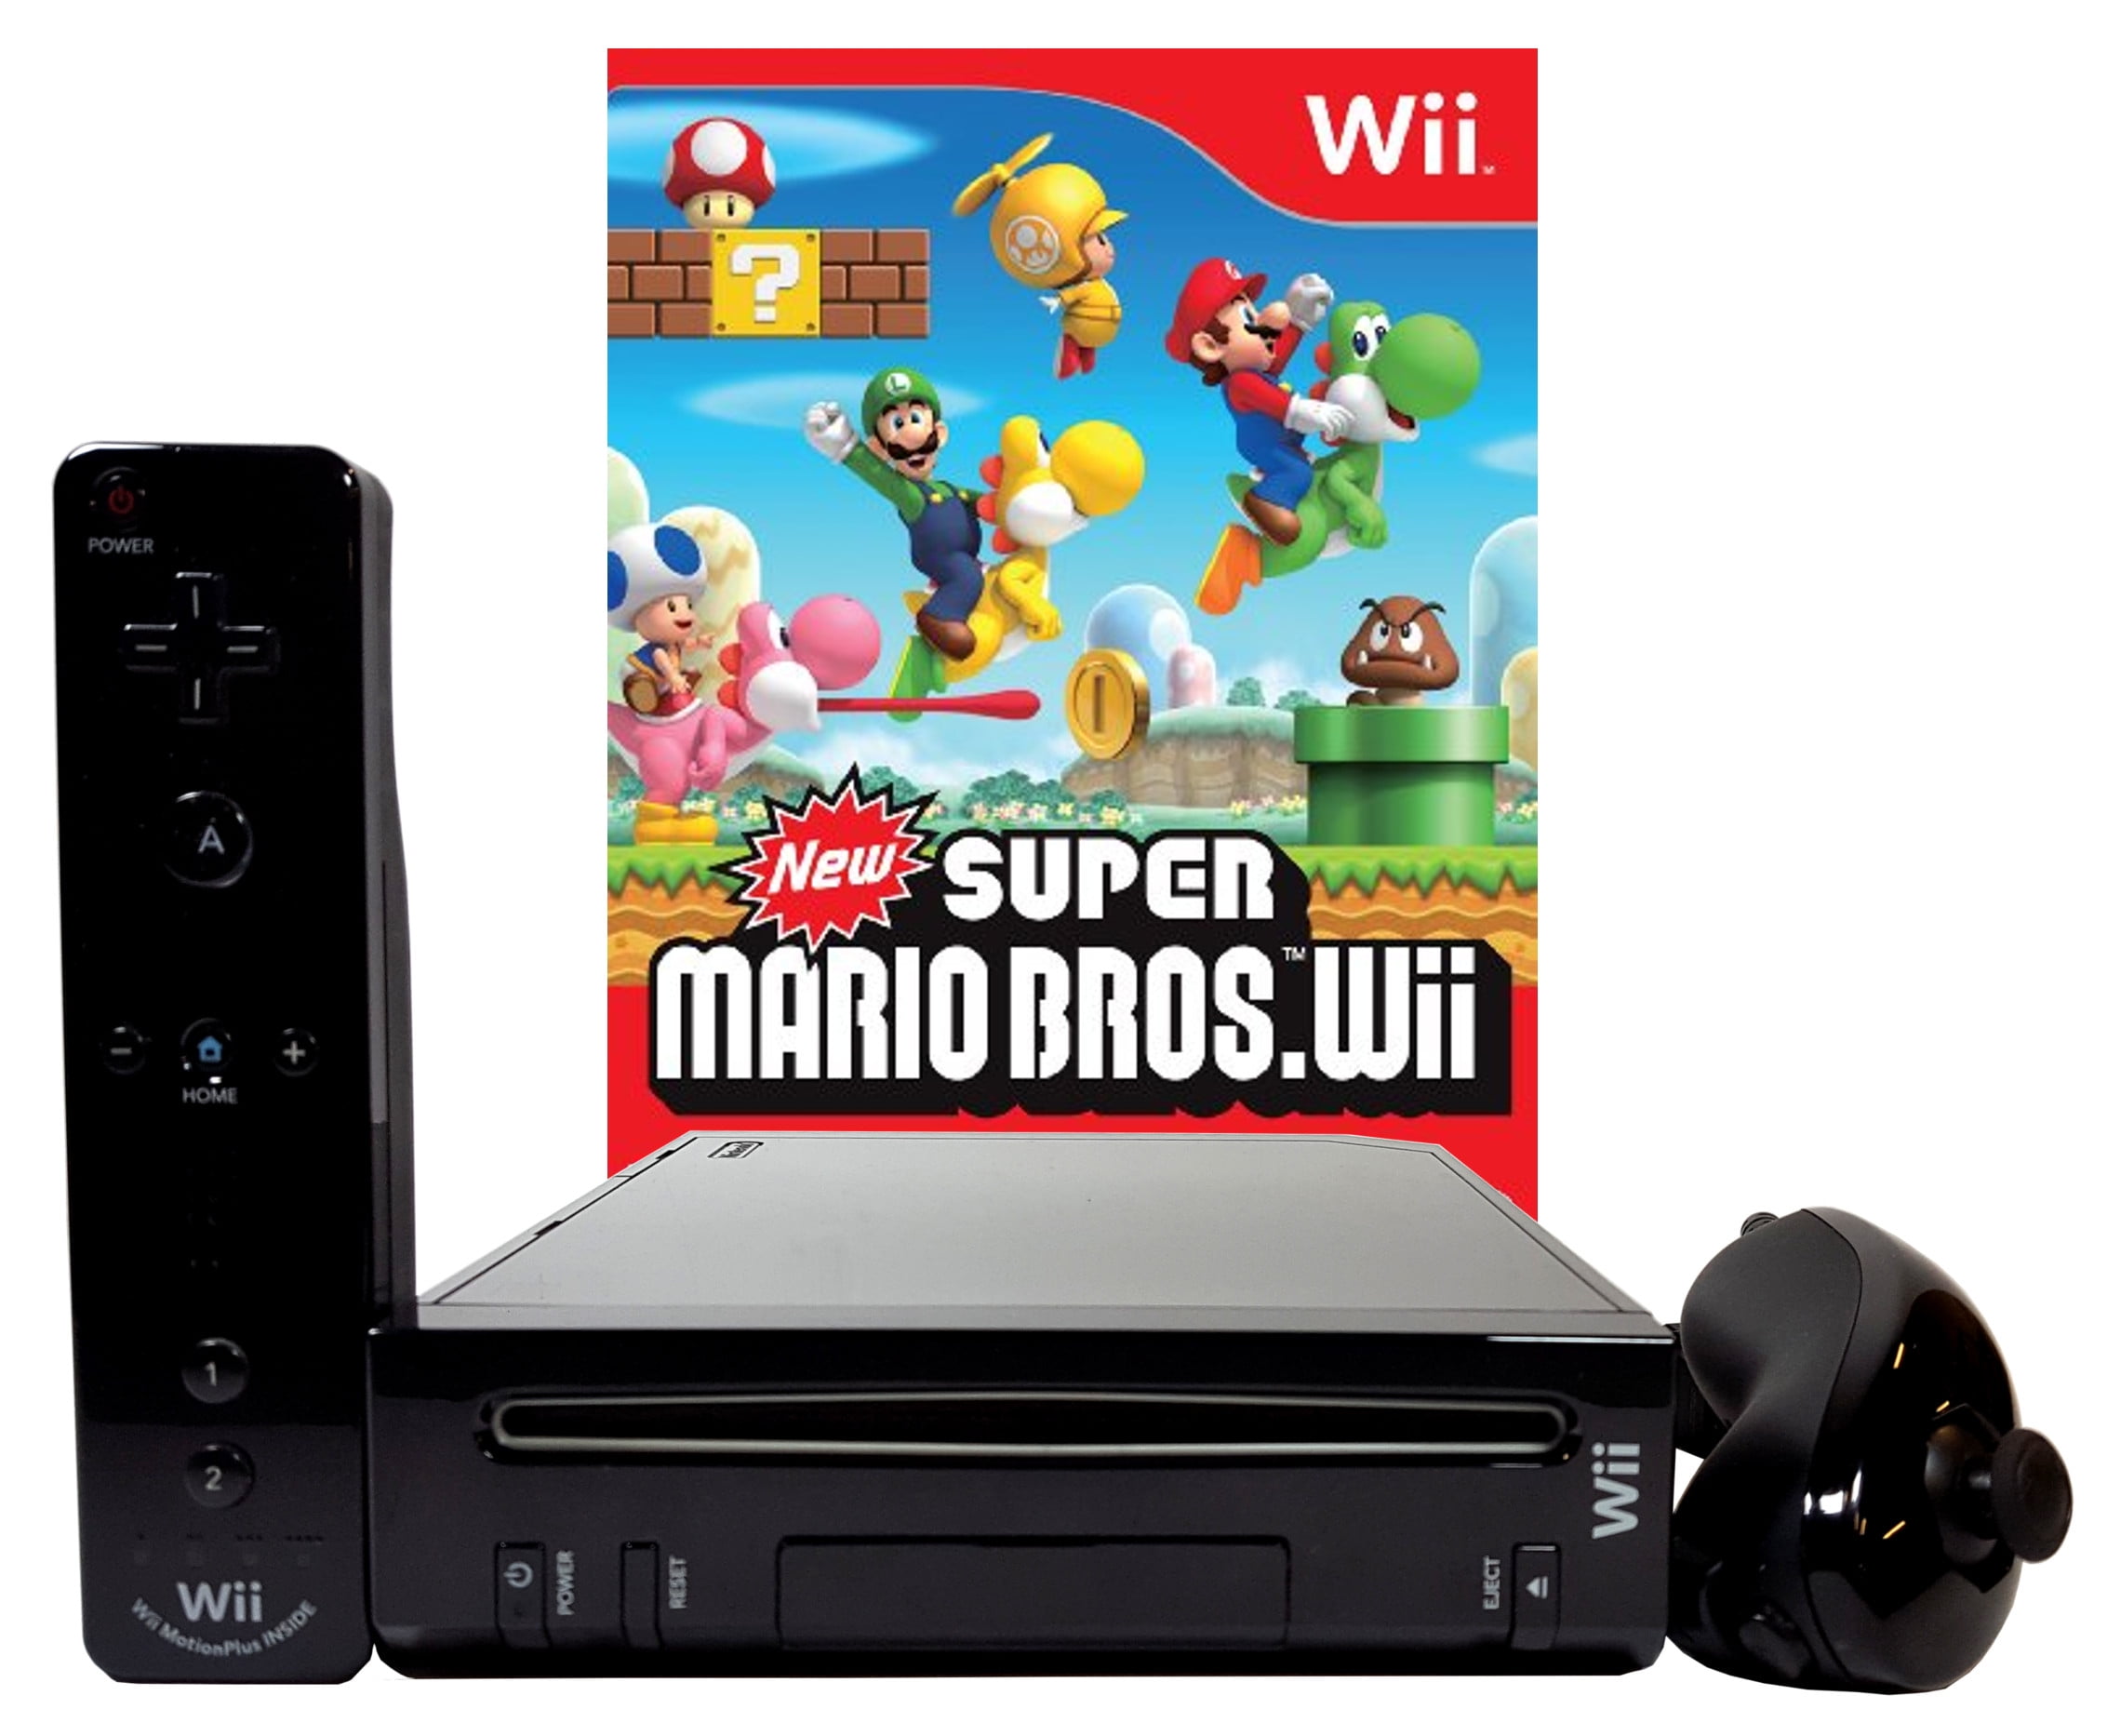 New Super Mario Bros Wii Nintendo WII (USADO)